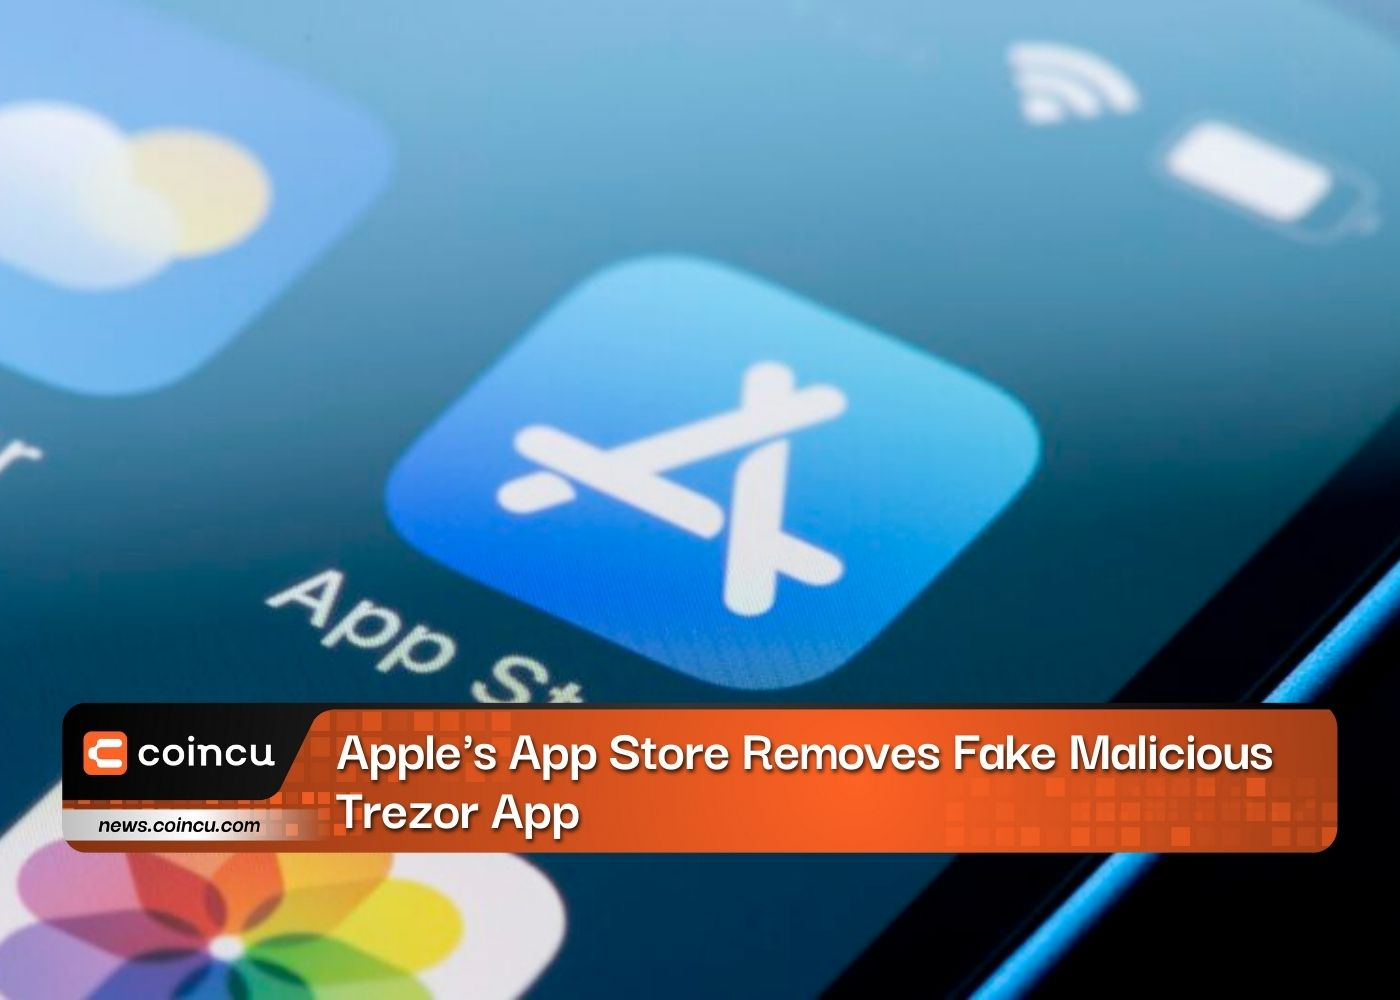 Caution: Apple's App Store Removes Fake Malicious Trezor App